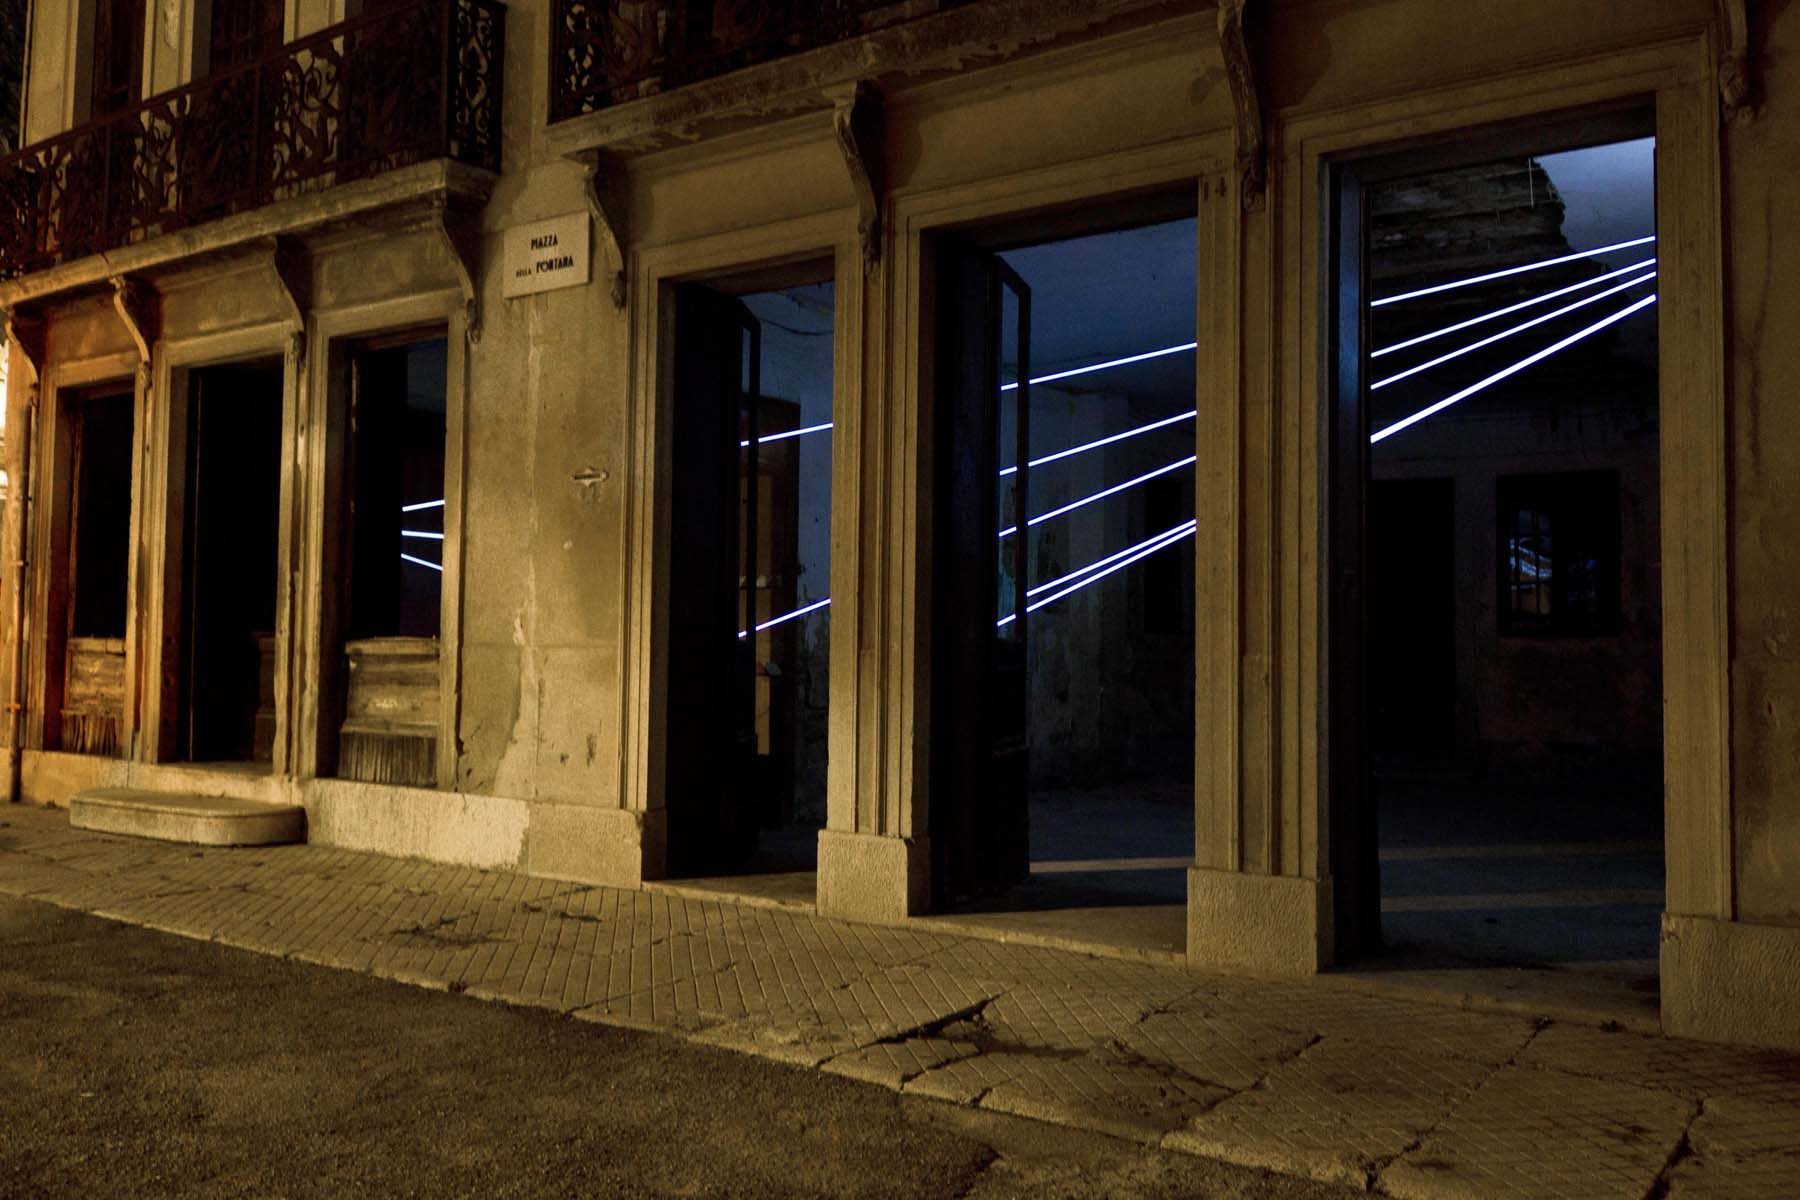 Carlo Bernardini, Aprite la luce, 2011, optical fiber steal, Palazzo Anas, Vittorio Veneto, ph. N.Covre